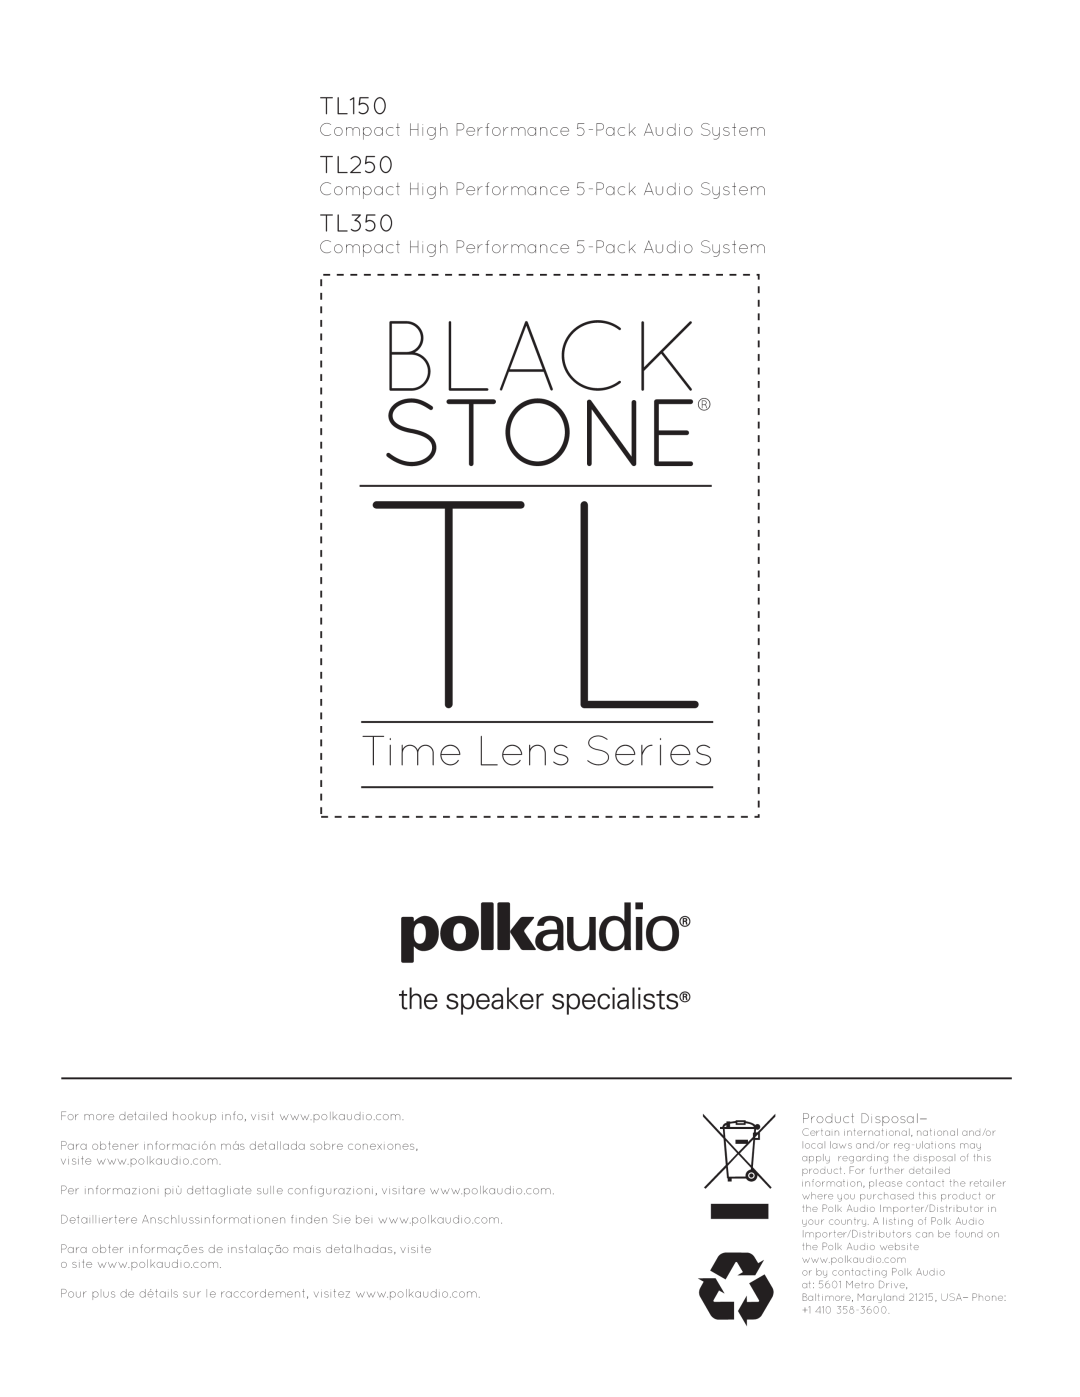 Polk Audio TL350 manual Black, Stone, Time Lens Series, TL150, TL250, Compact High Performance 5-PackAudio System 